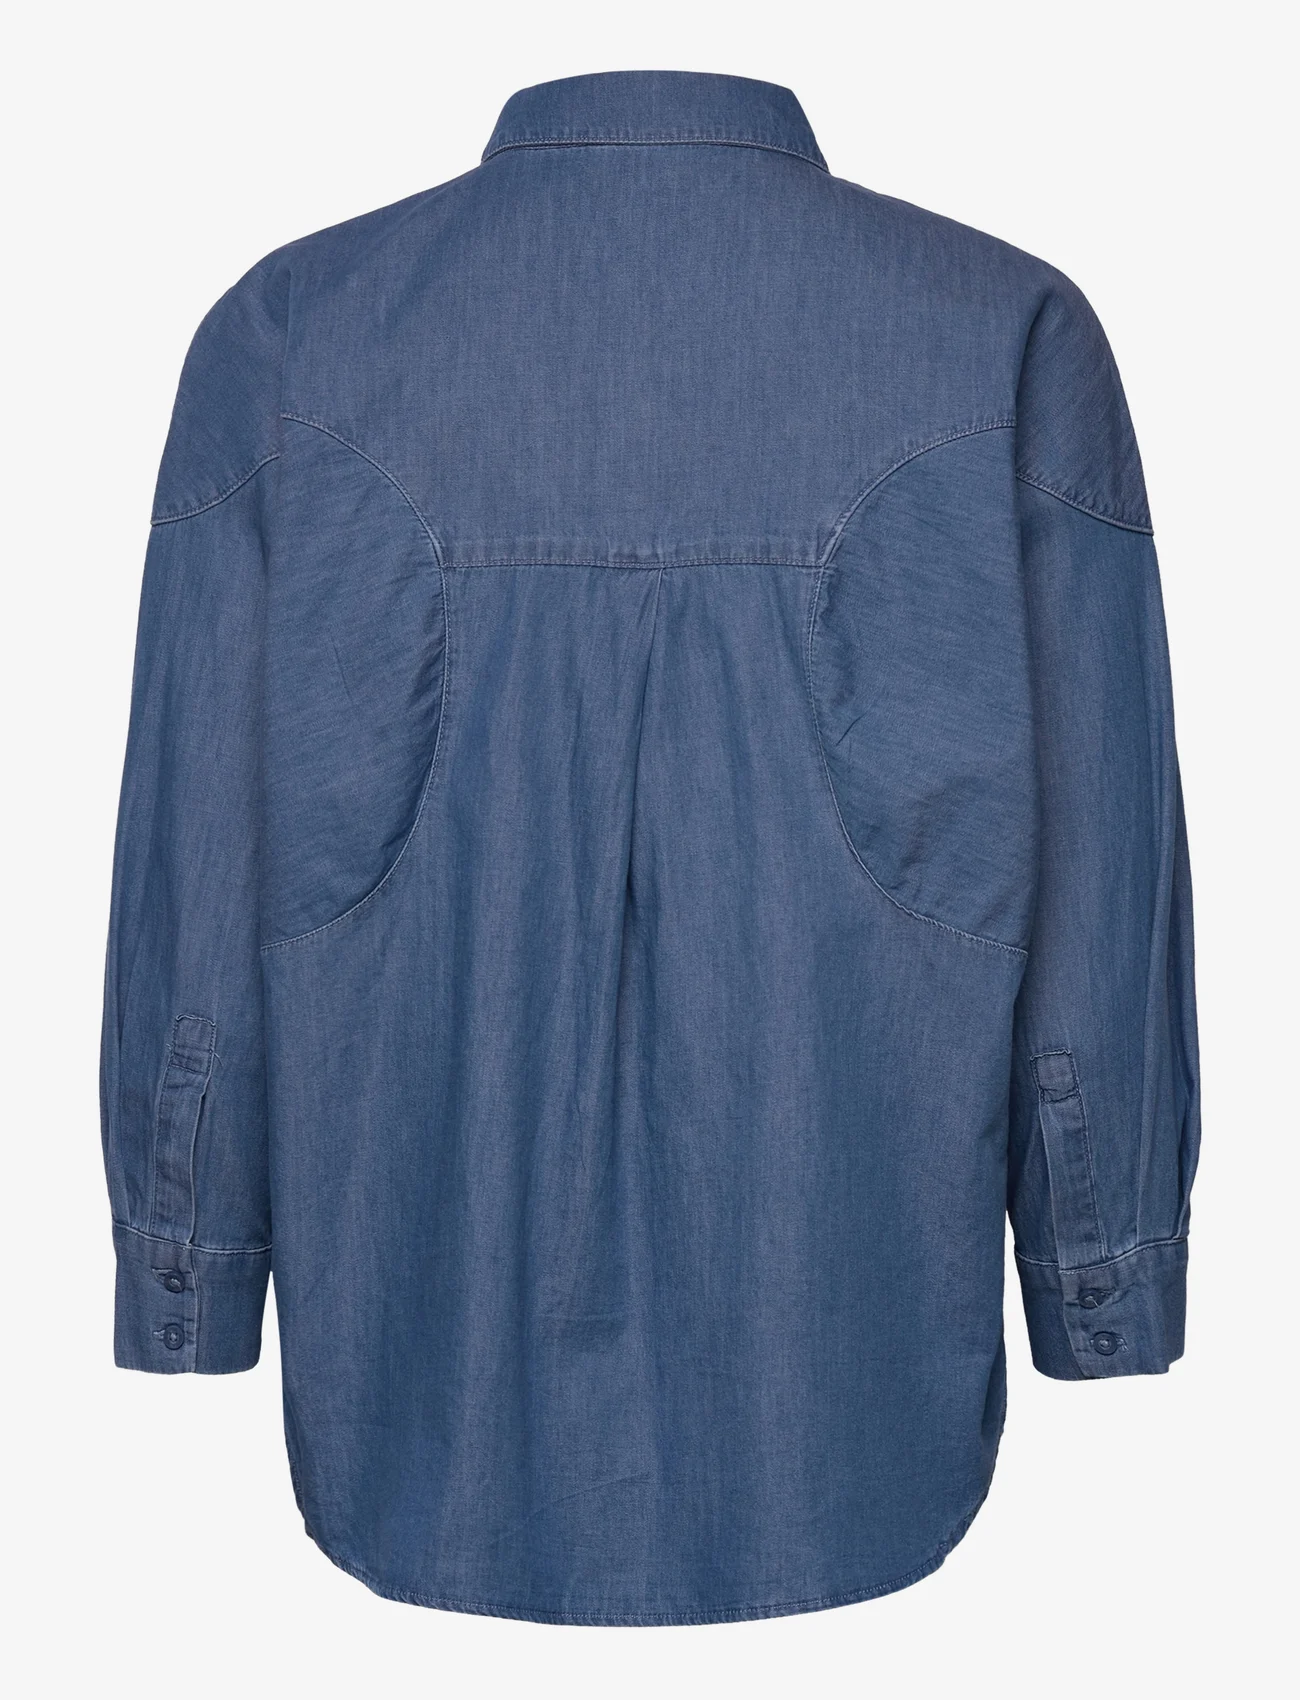 Esprit Collection - Cotton denim blouse - jeansskjortor - blue medium wash - 1